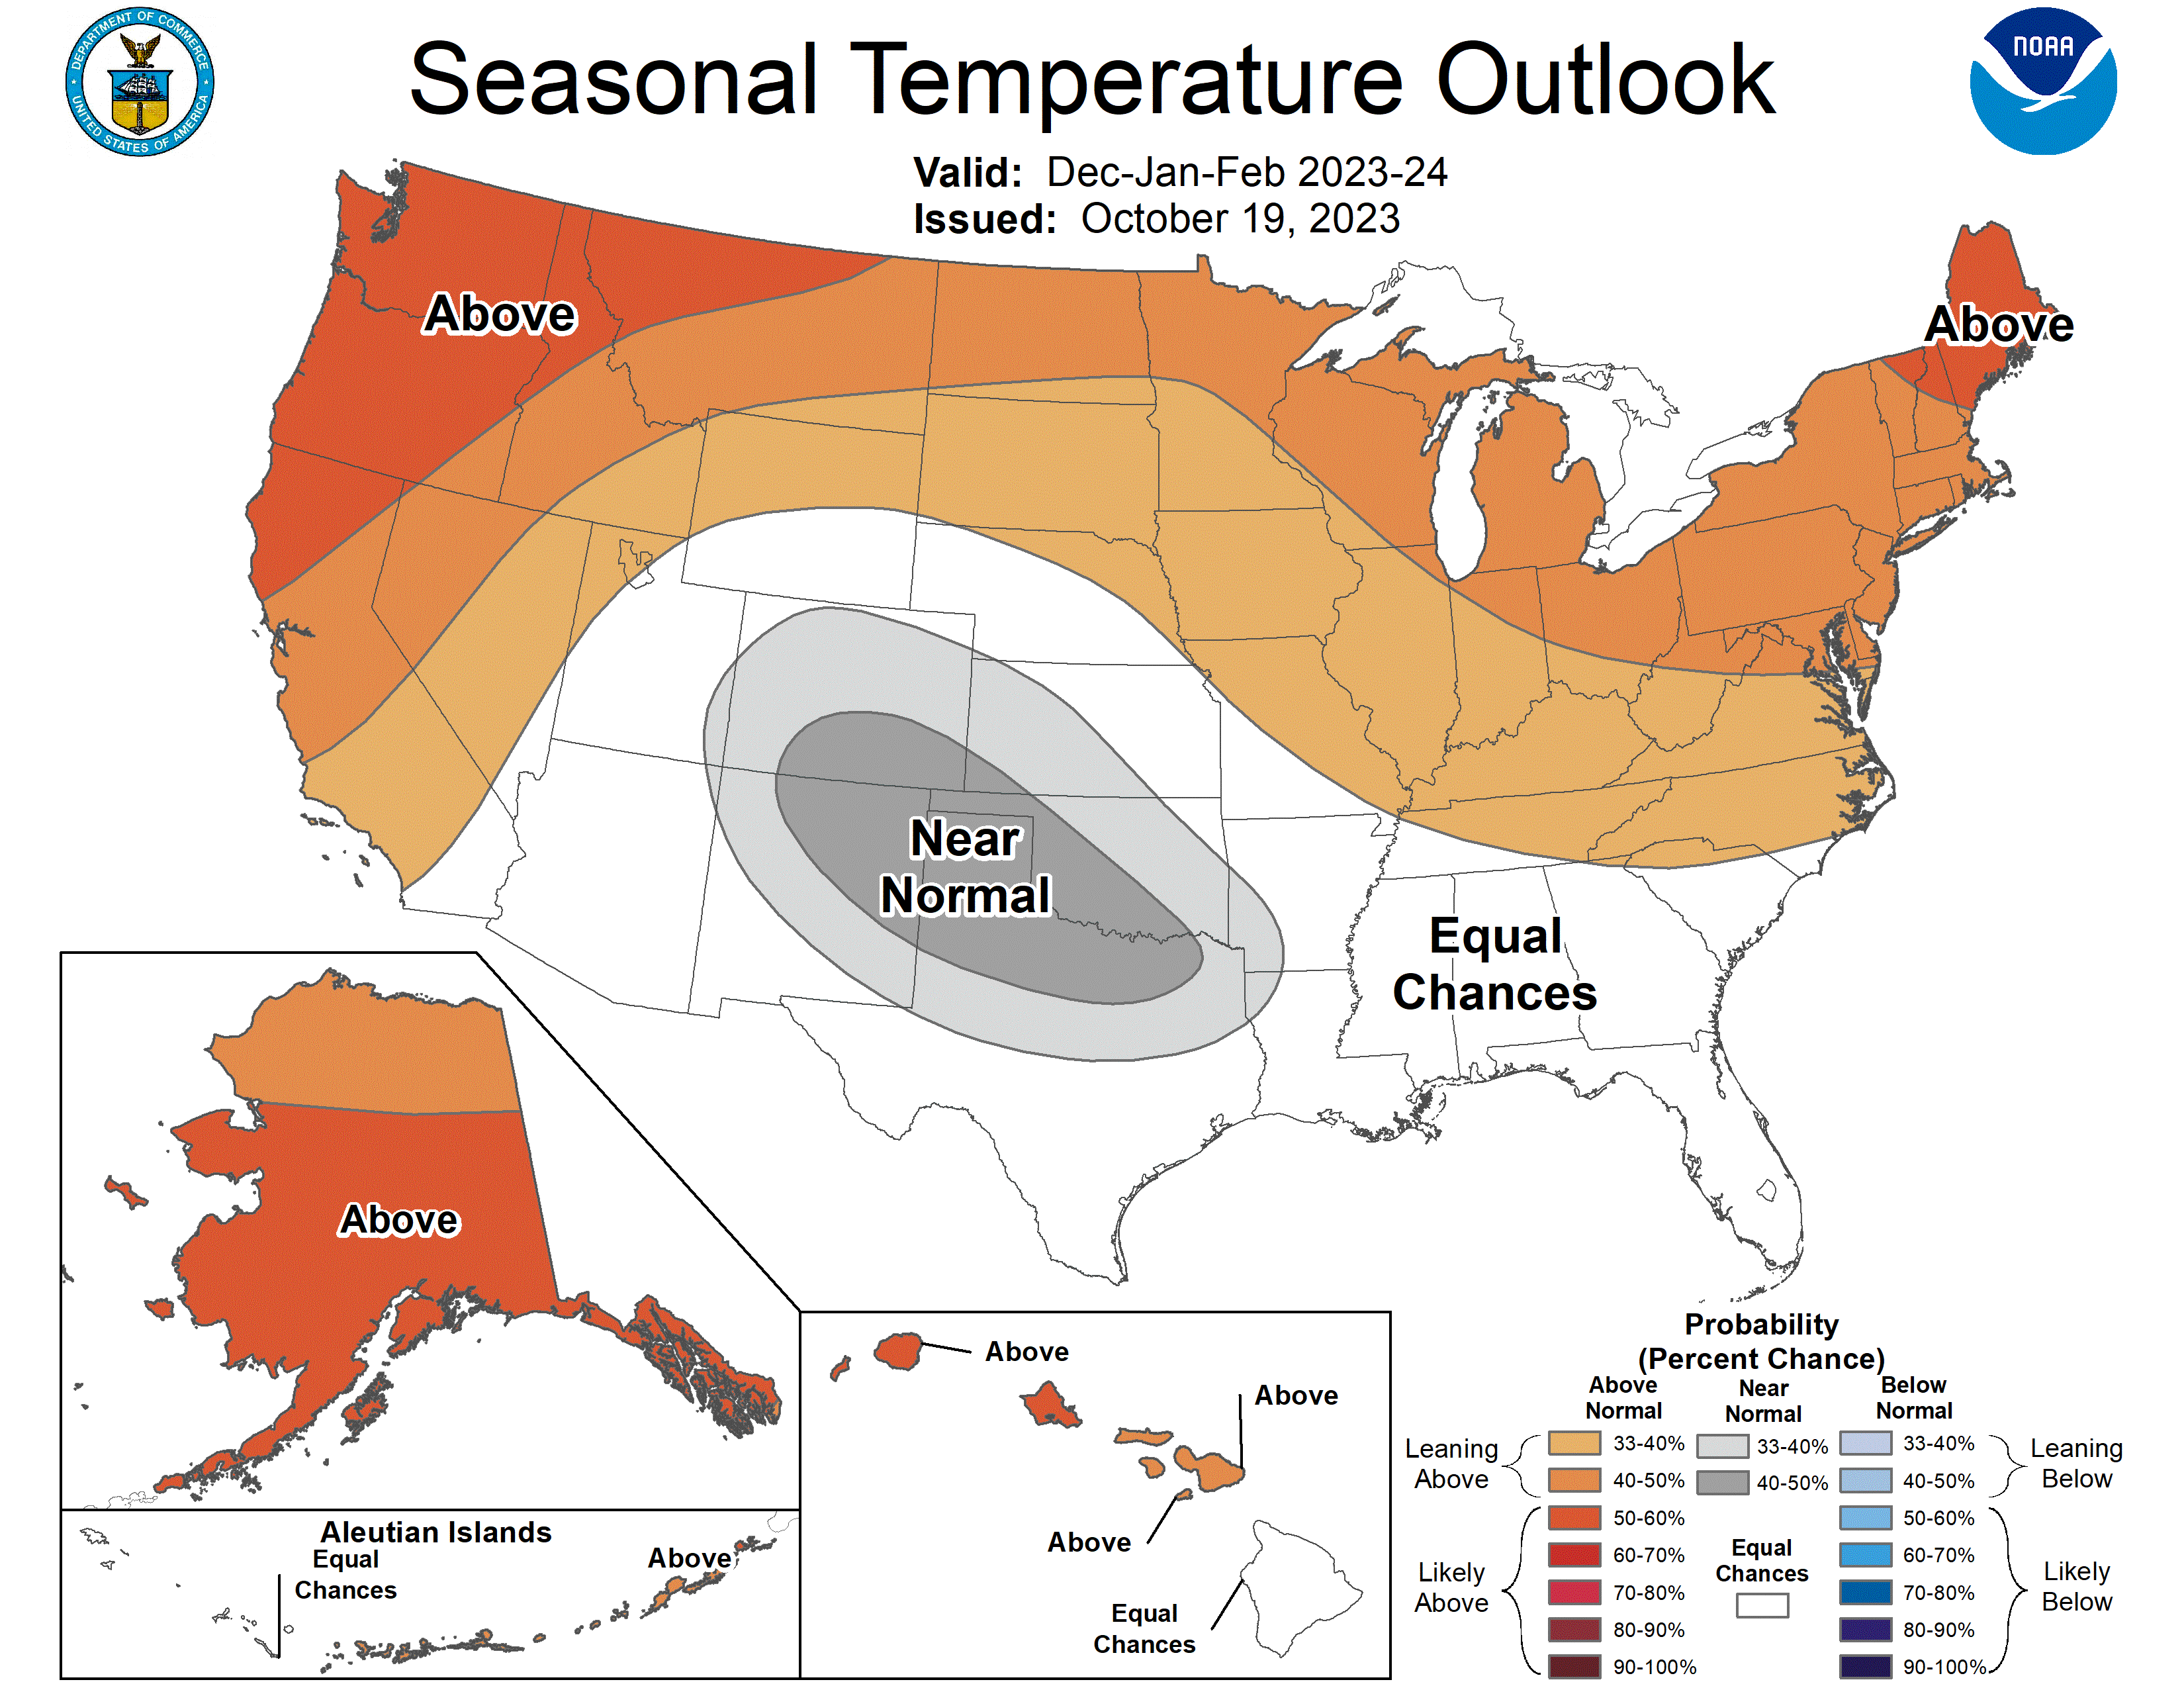 image-winteroutlook-seasonal-temperature-2023-101923.gif 